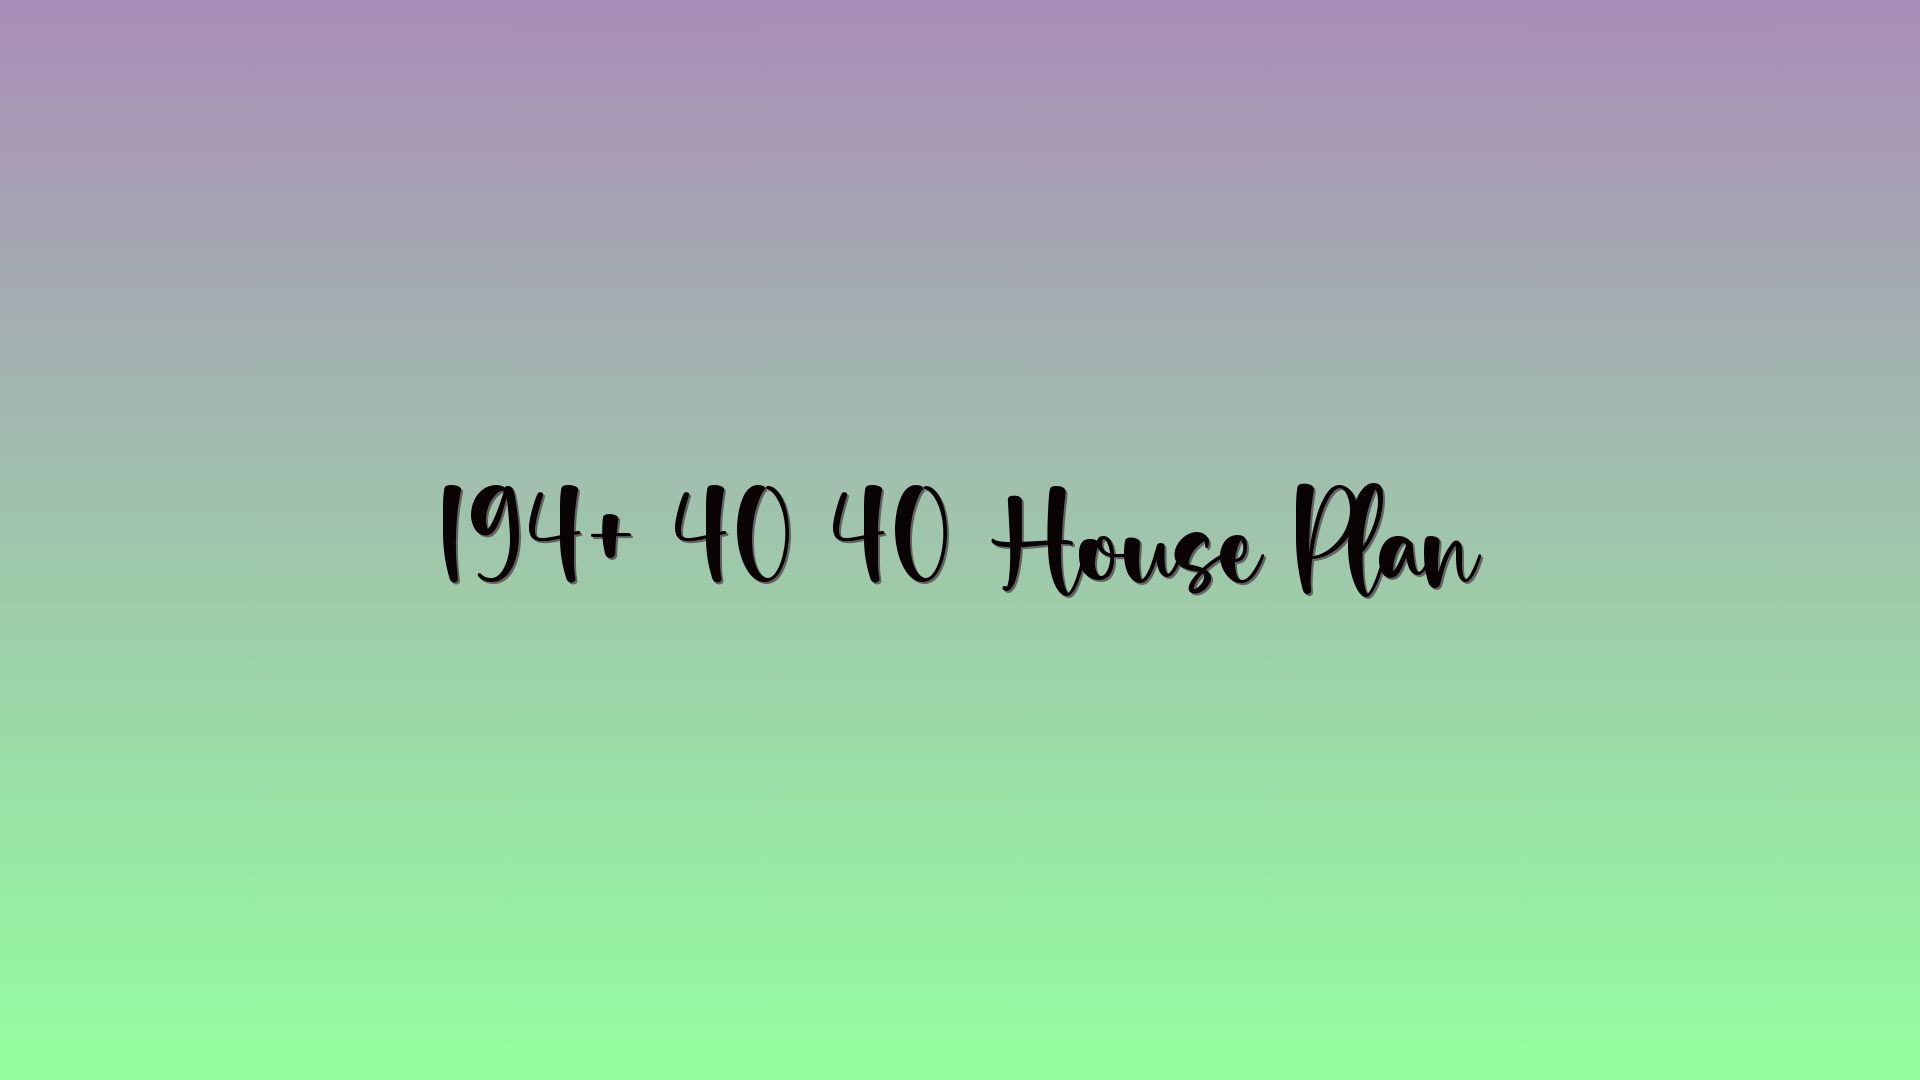 194+ 40 40 House Plan